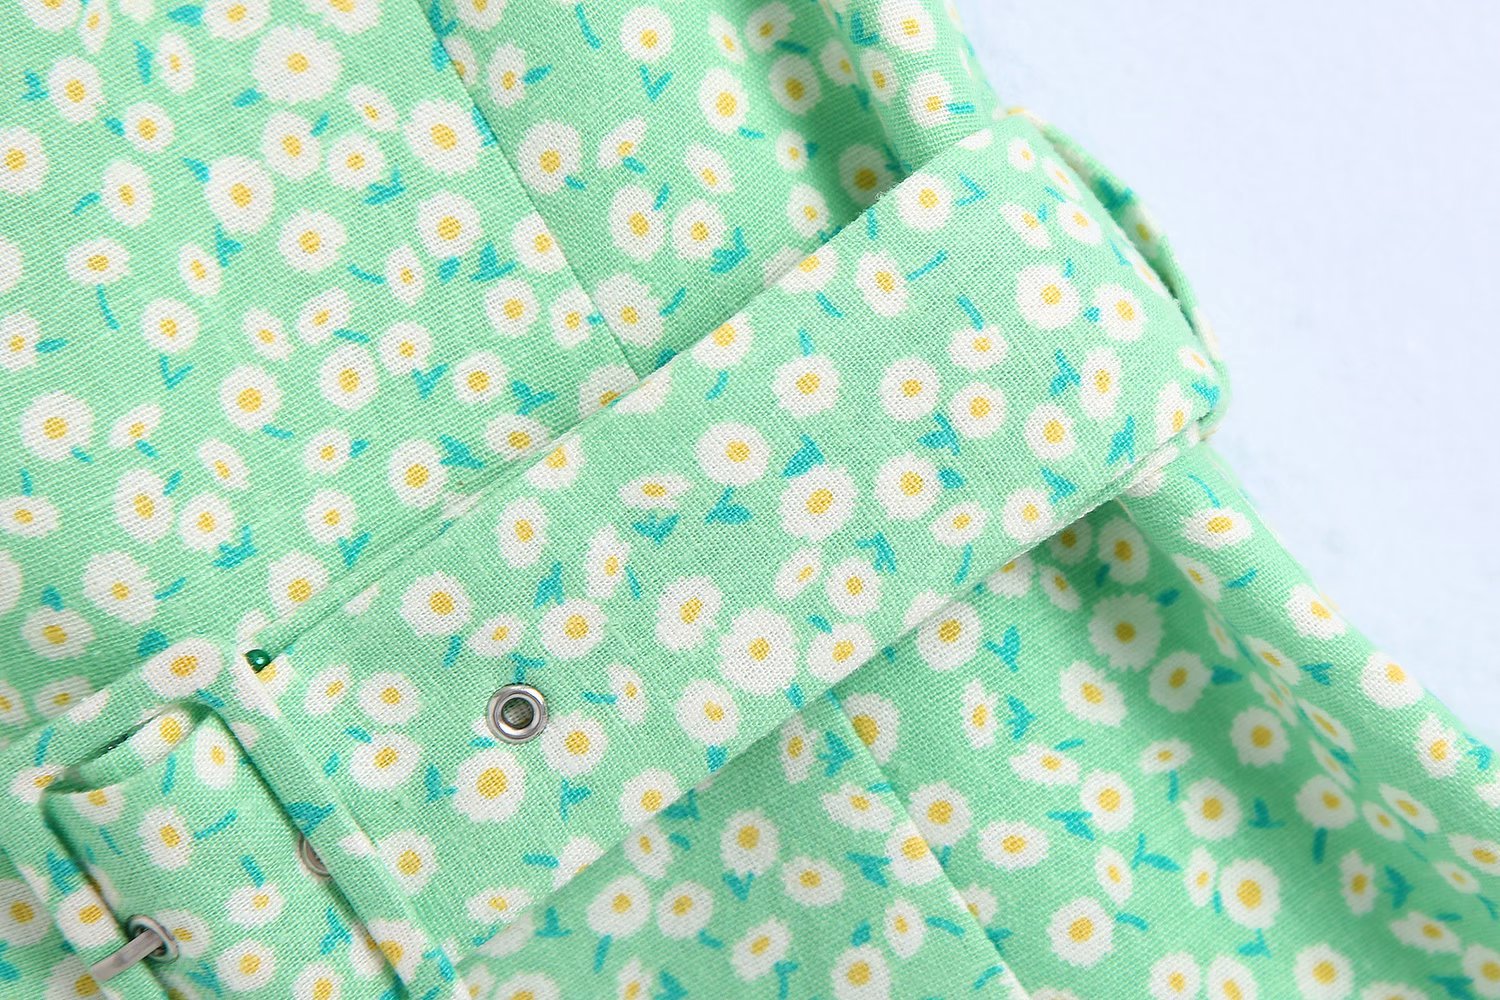 wholesale spring flower printed linen fashion short dress NSAM55736